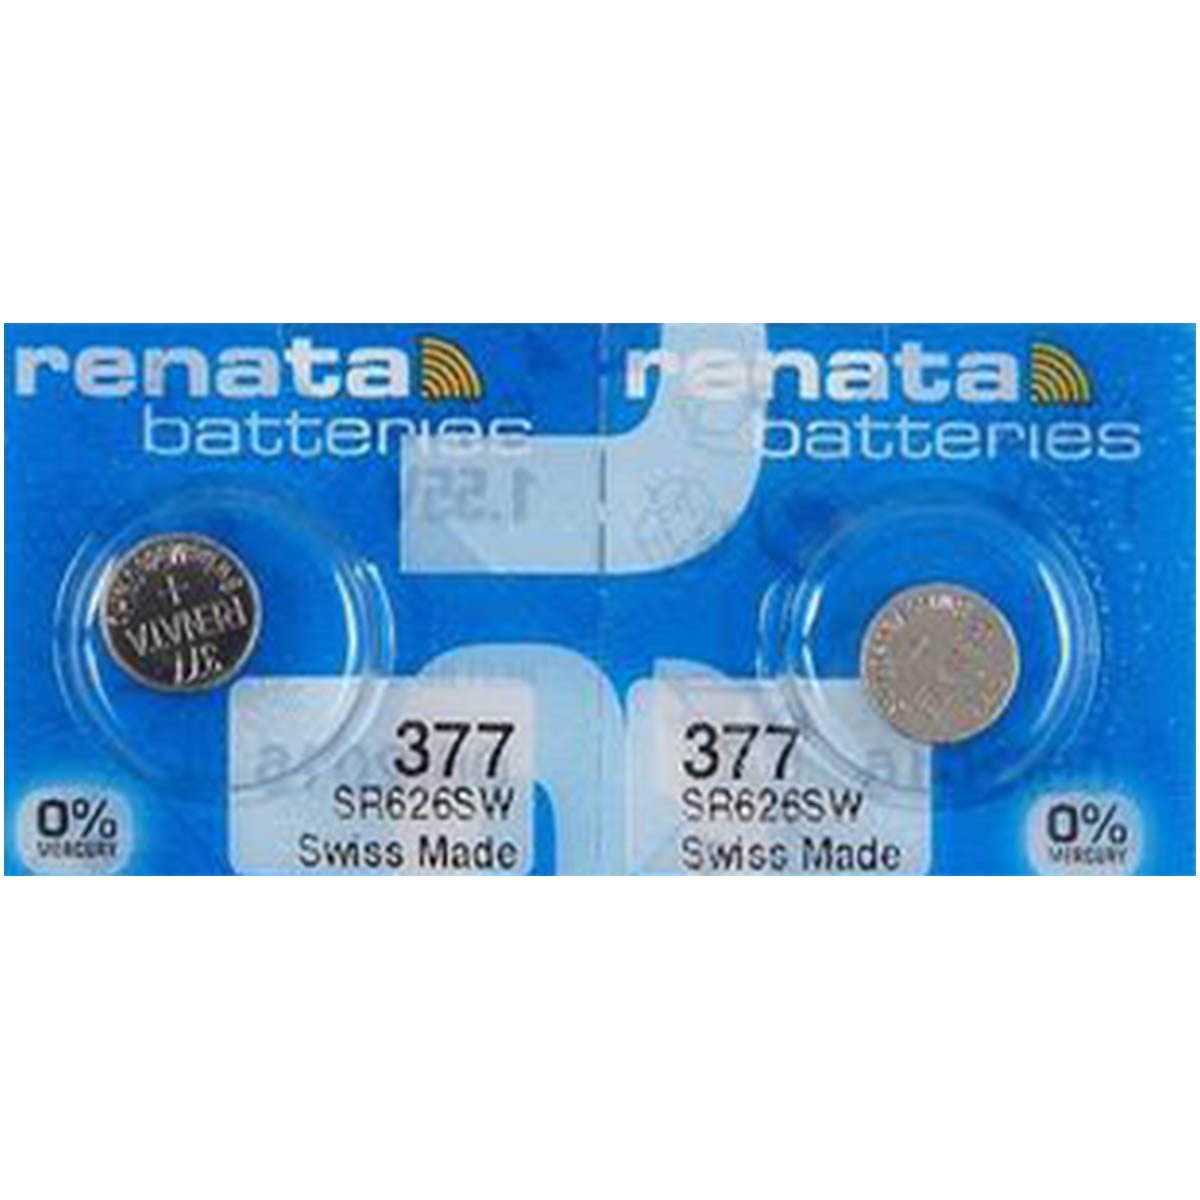 Renata 377 - SR626SW Battery - 100 Pieces